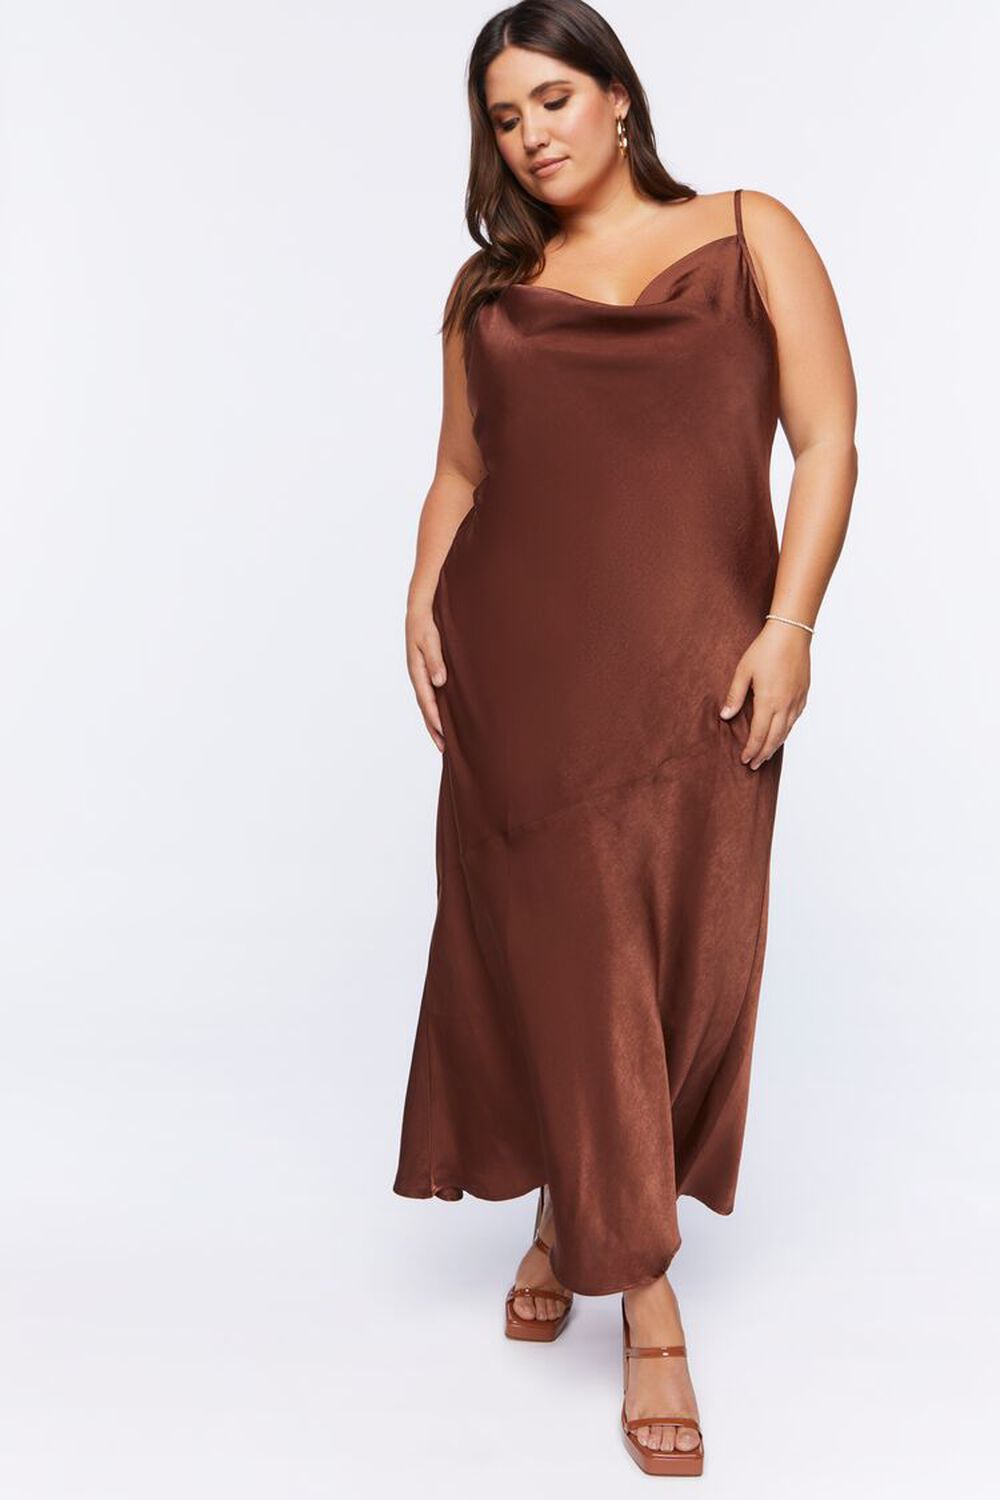 CHOCOLATE Plus Size Satin Slip Maxi Dress, image 1